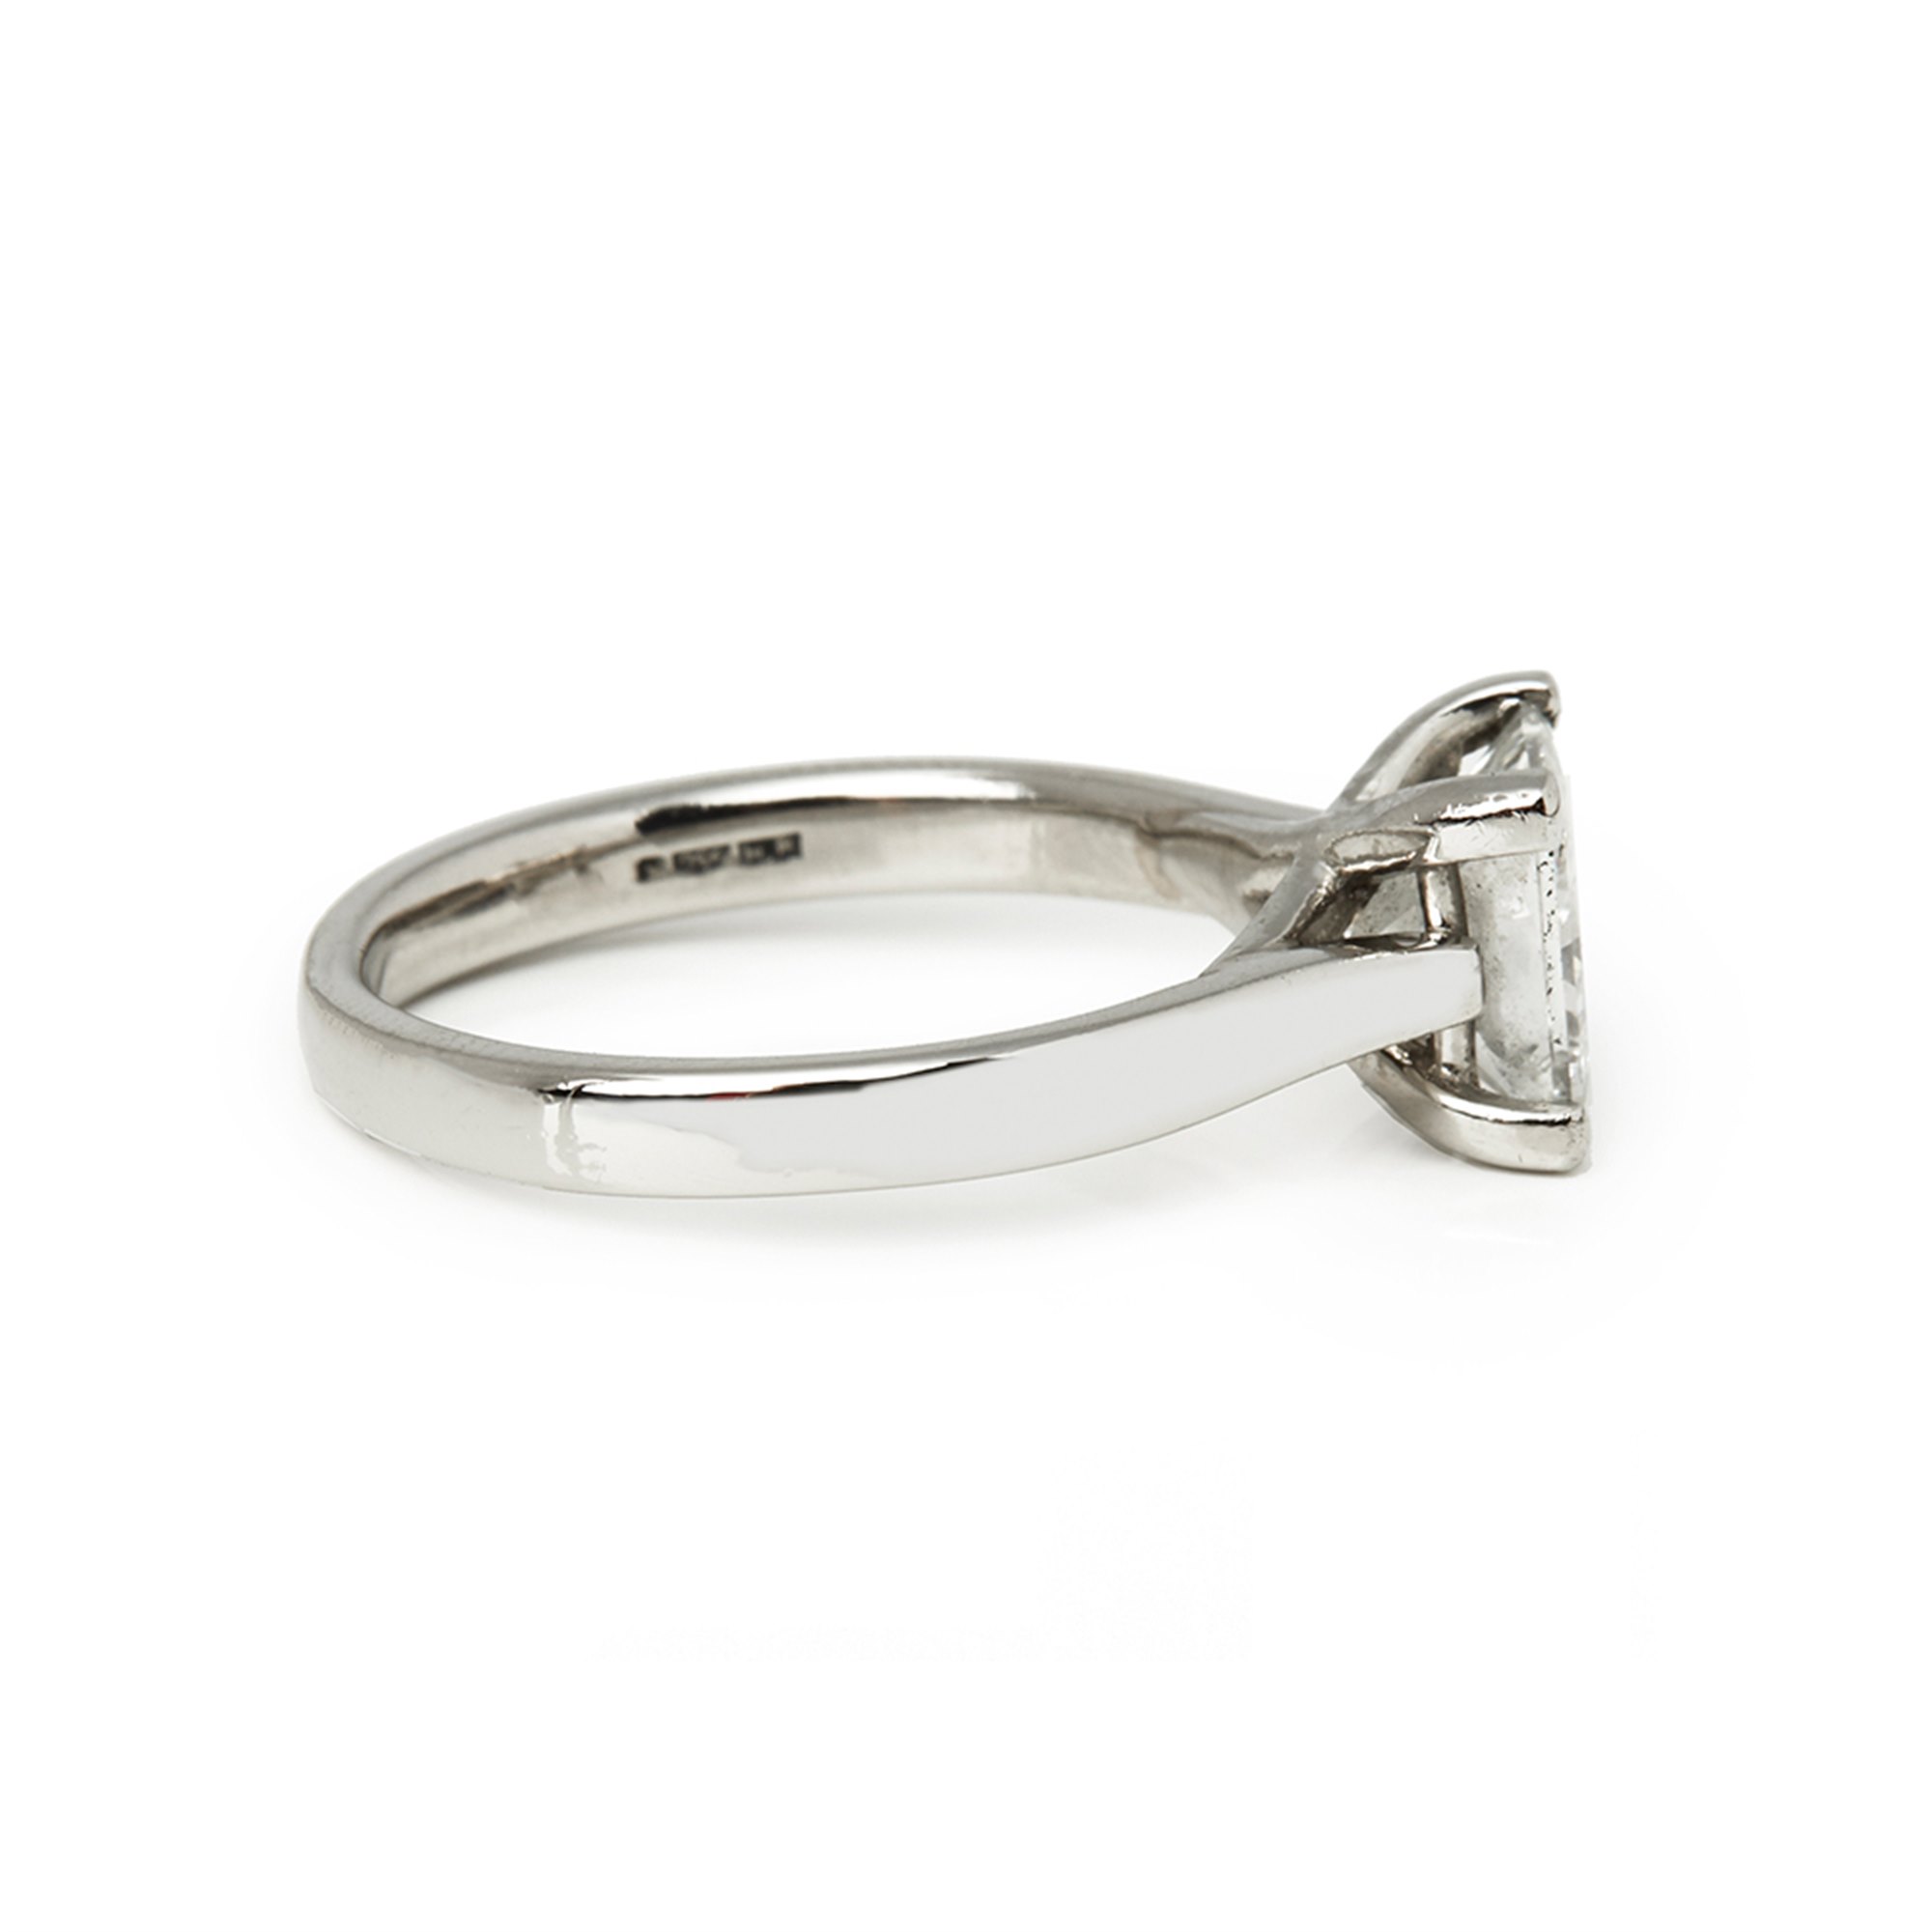 Diamanten Princess Cut 1.89ct Diamond Solitaire Engagement Ring